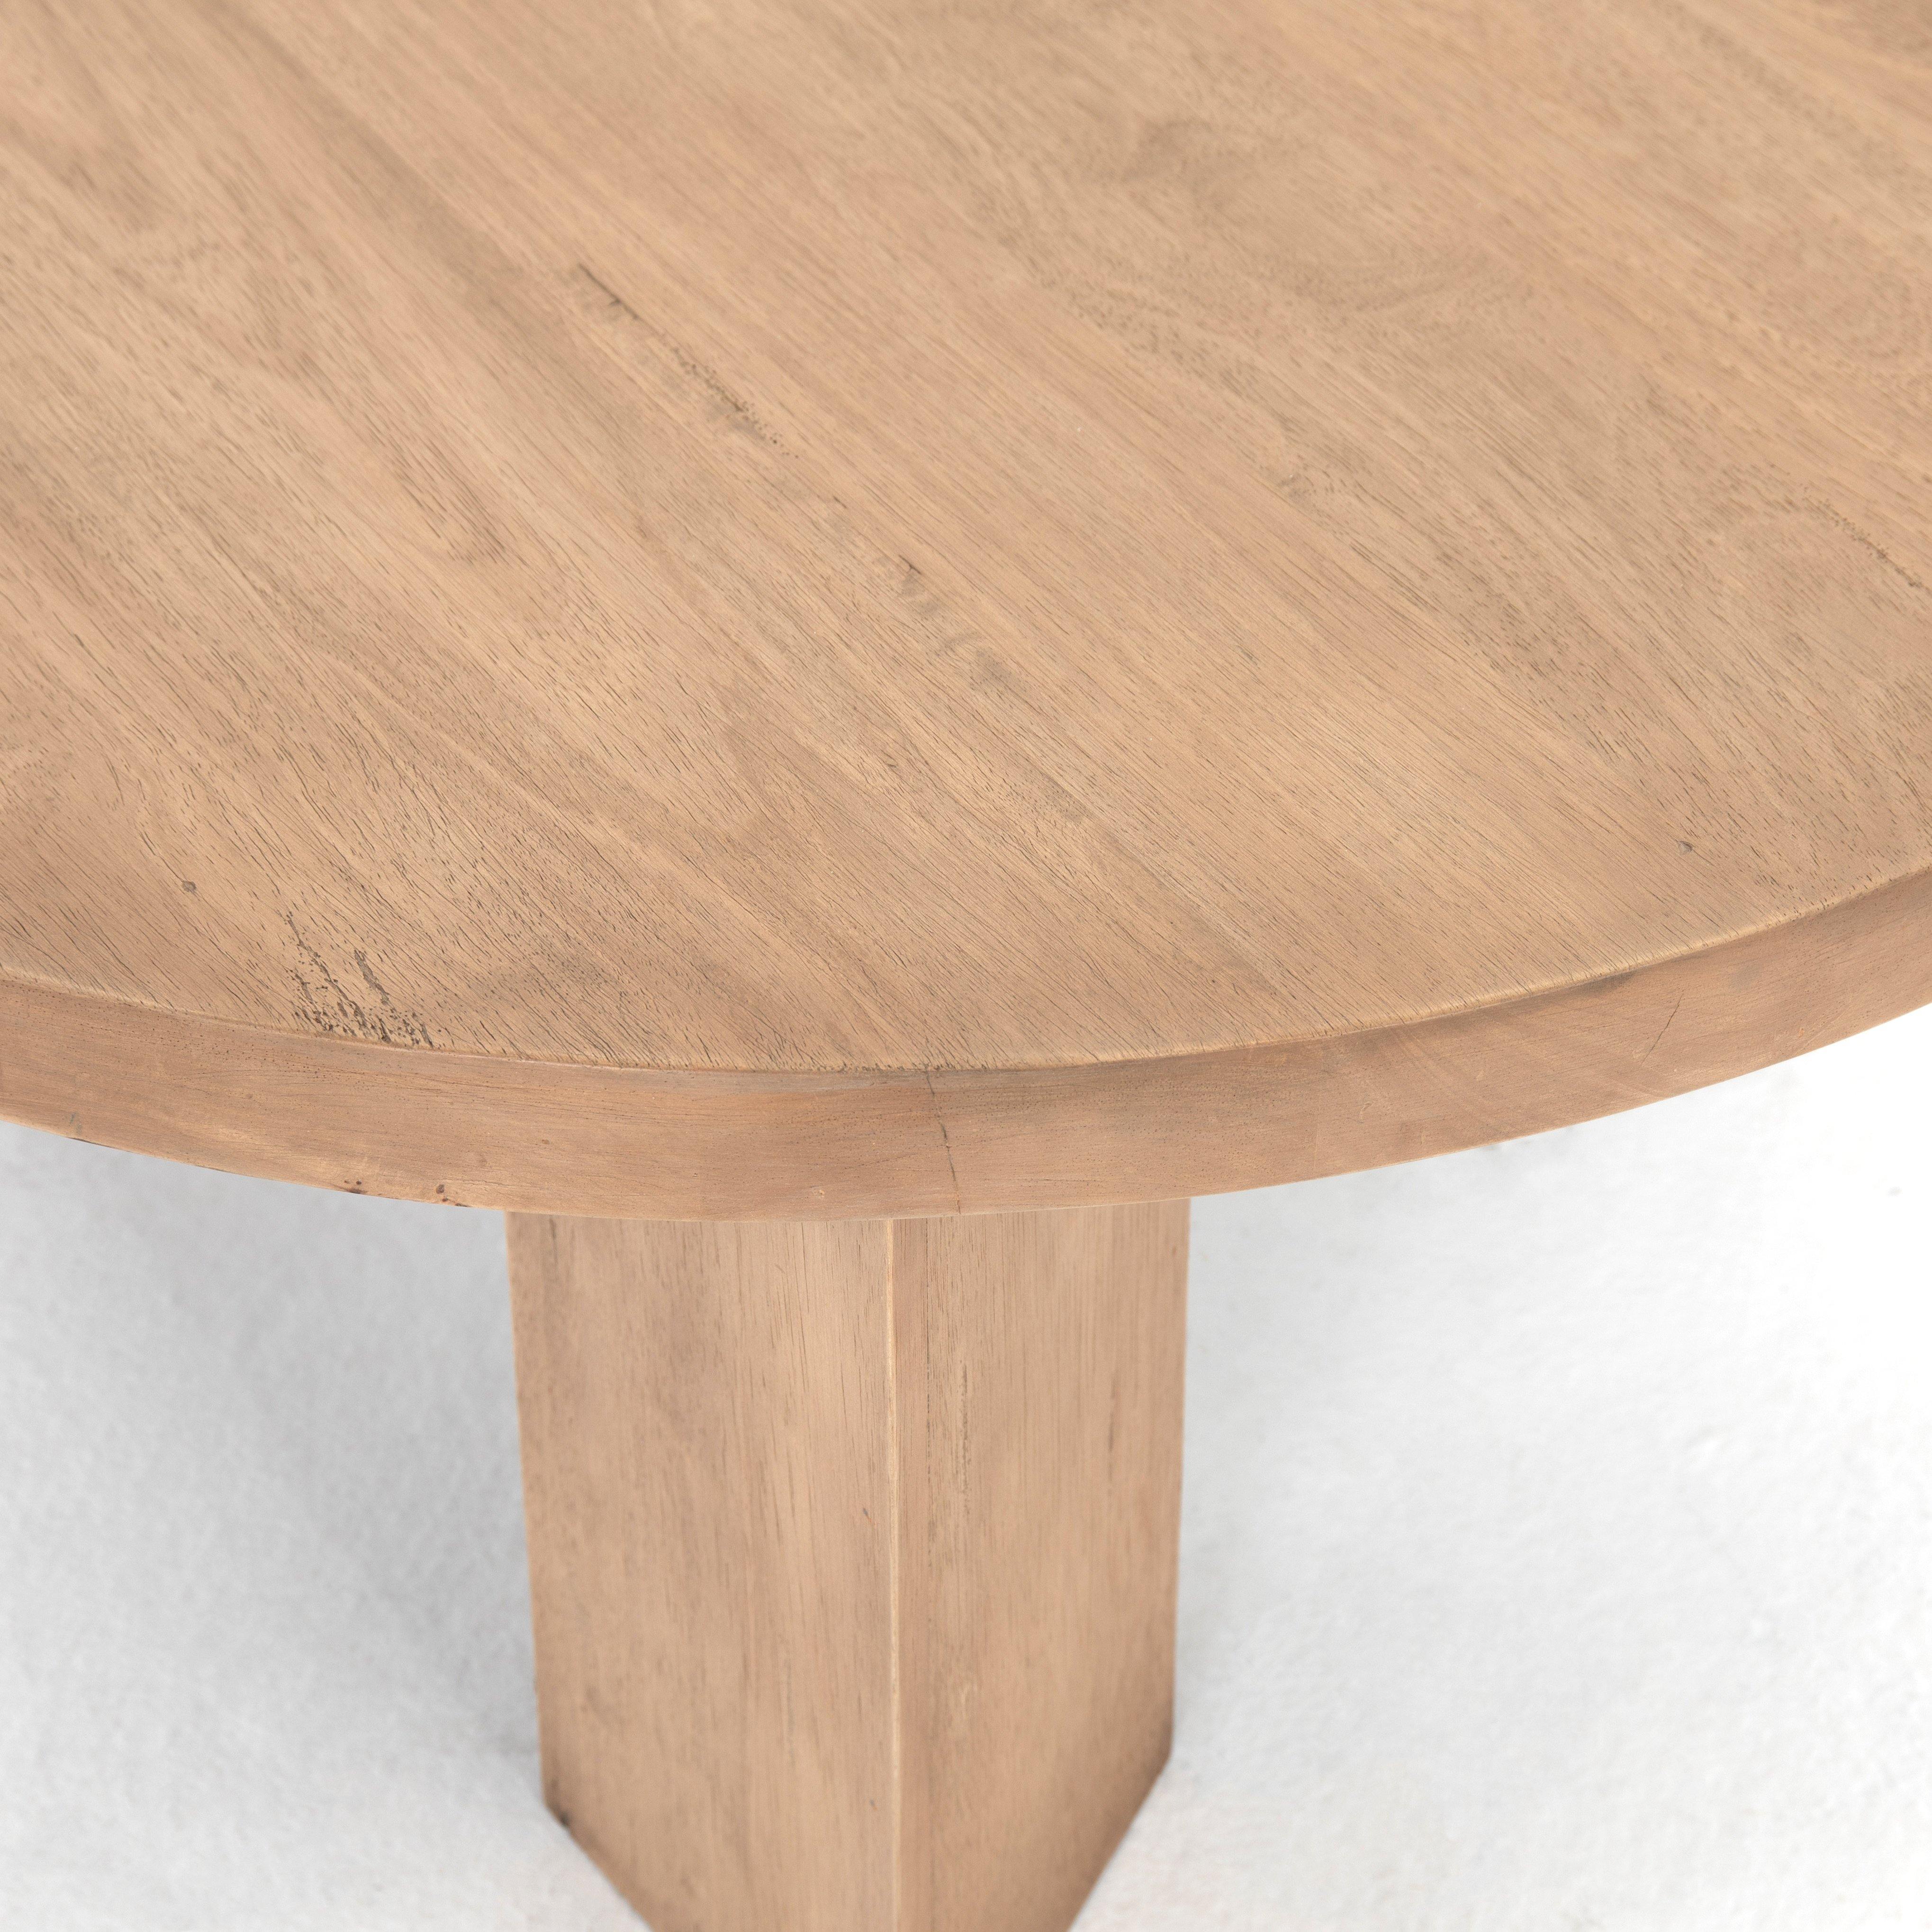 Mesa Round Coffee Table, Light - Reimagine Designs - coffee table, new